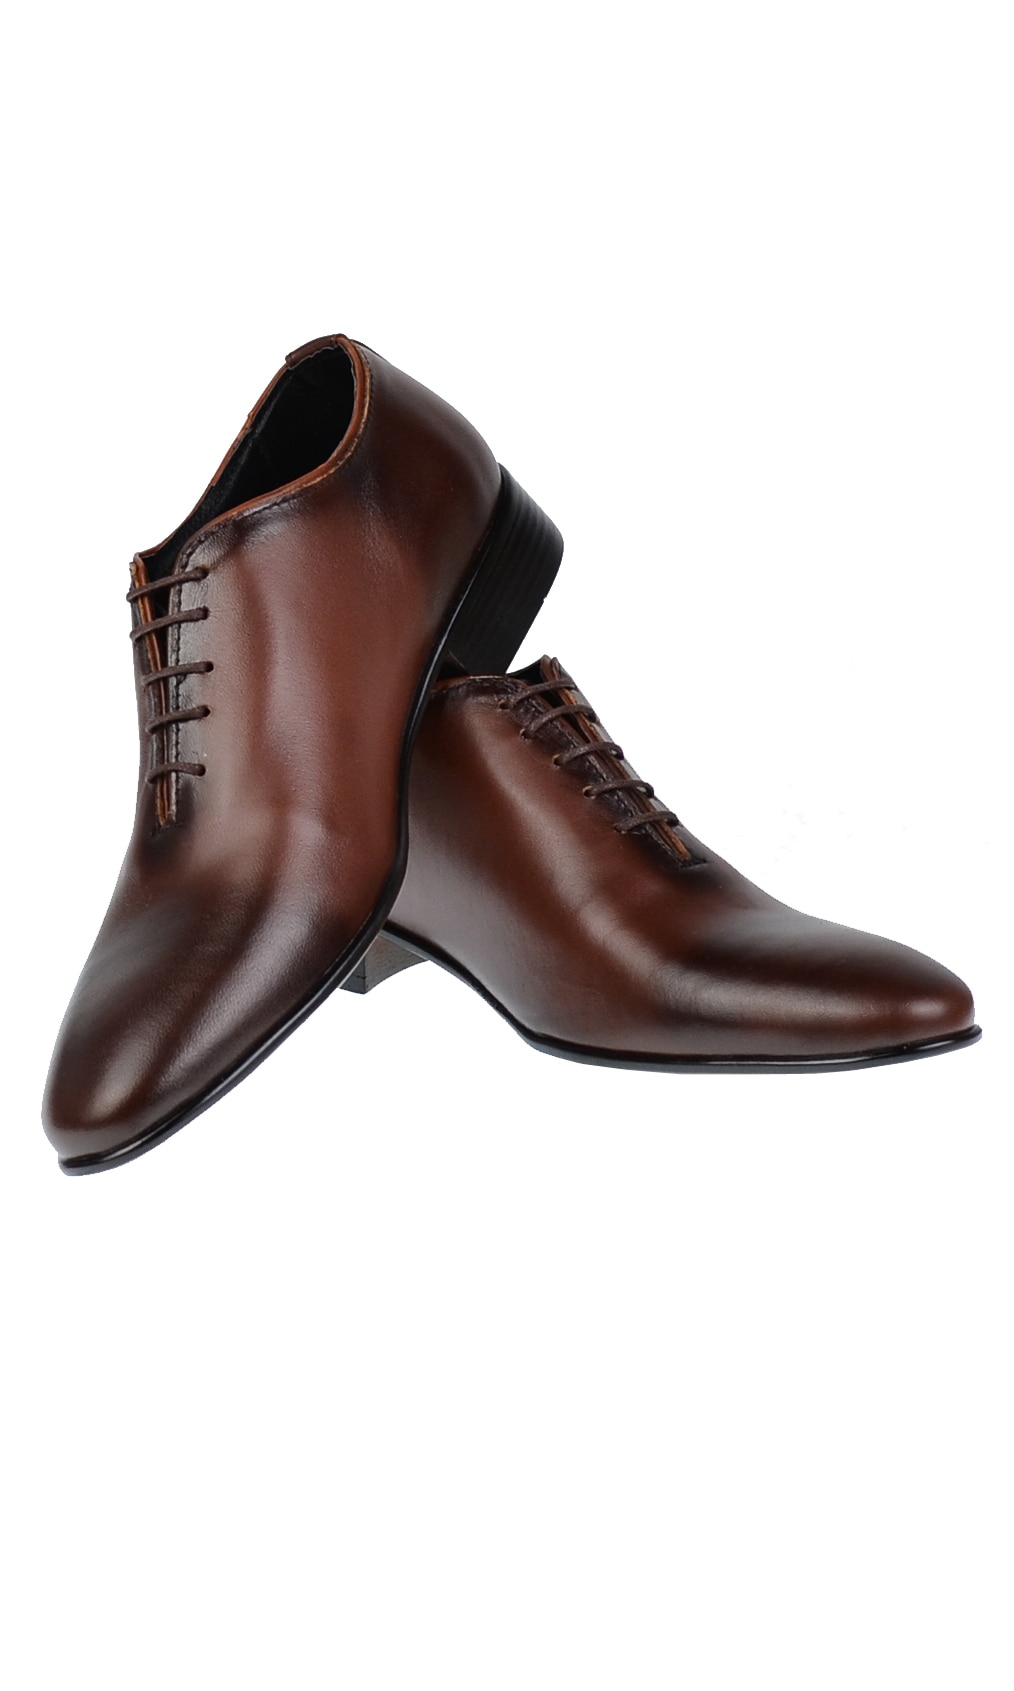 Odysseus Production goal Pantofi barbati eleganti din piele naturala maro 024MBOX - marimea 38 -  eMAG.ro